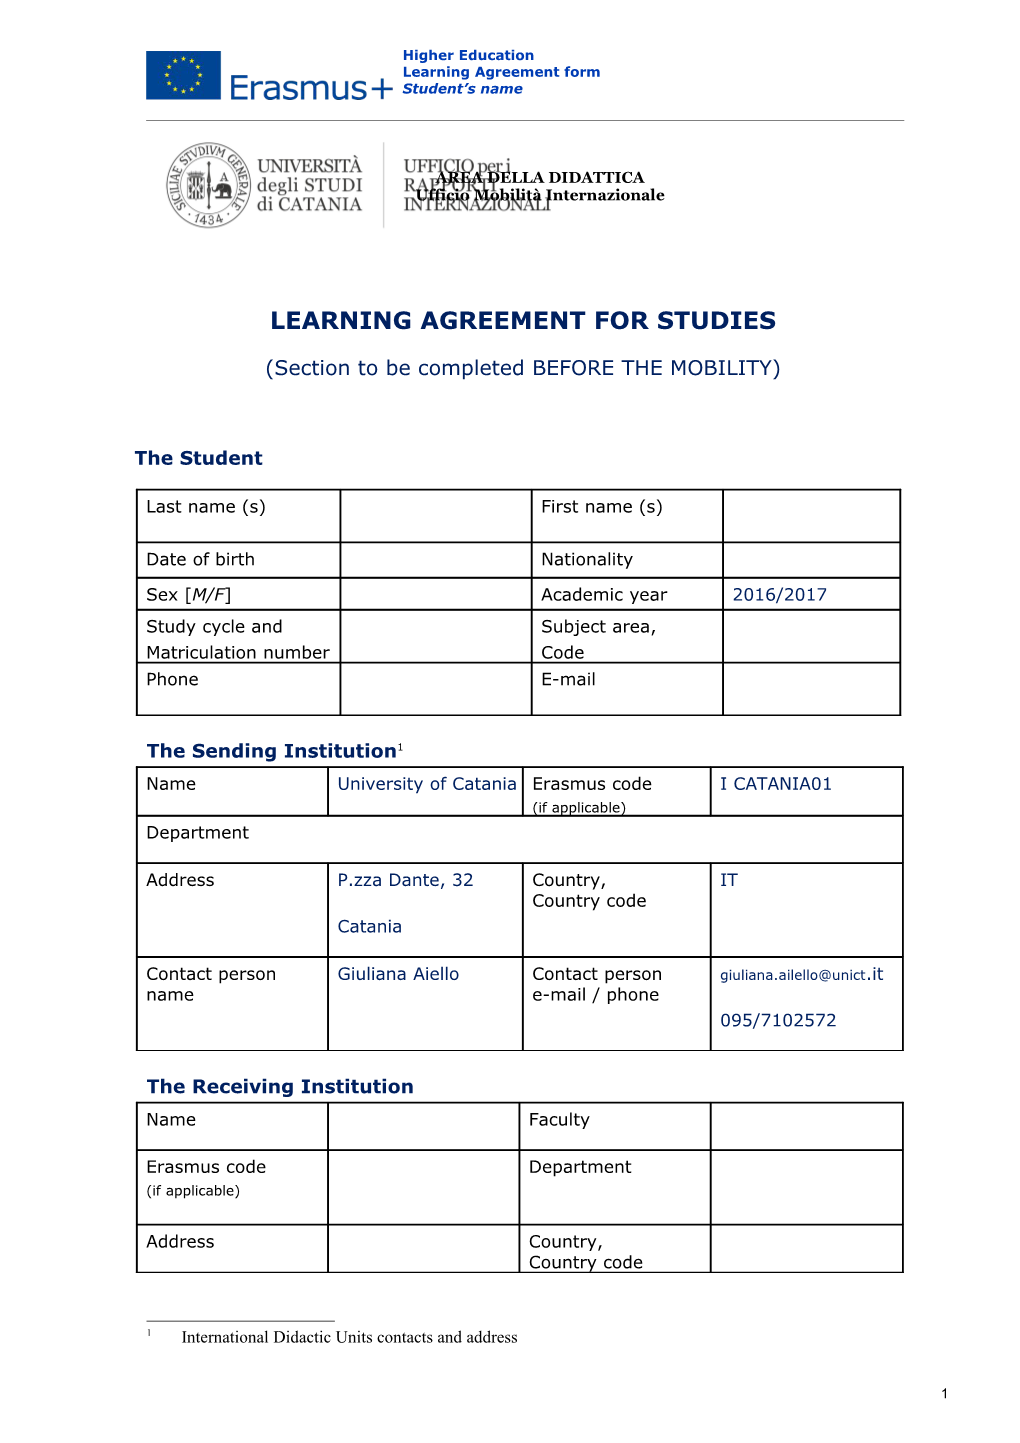 Learning Agreement for Studies s5